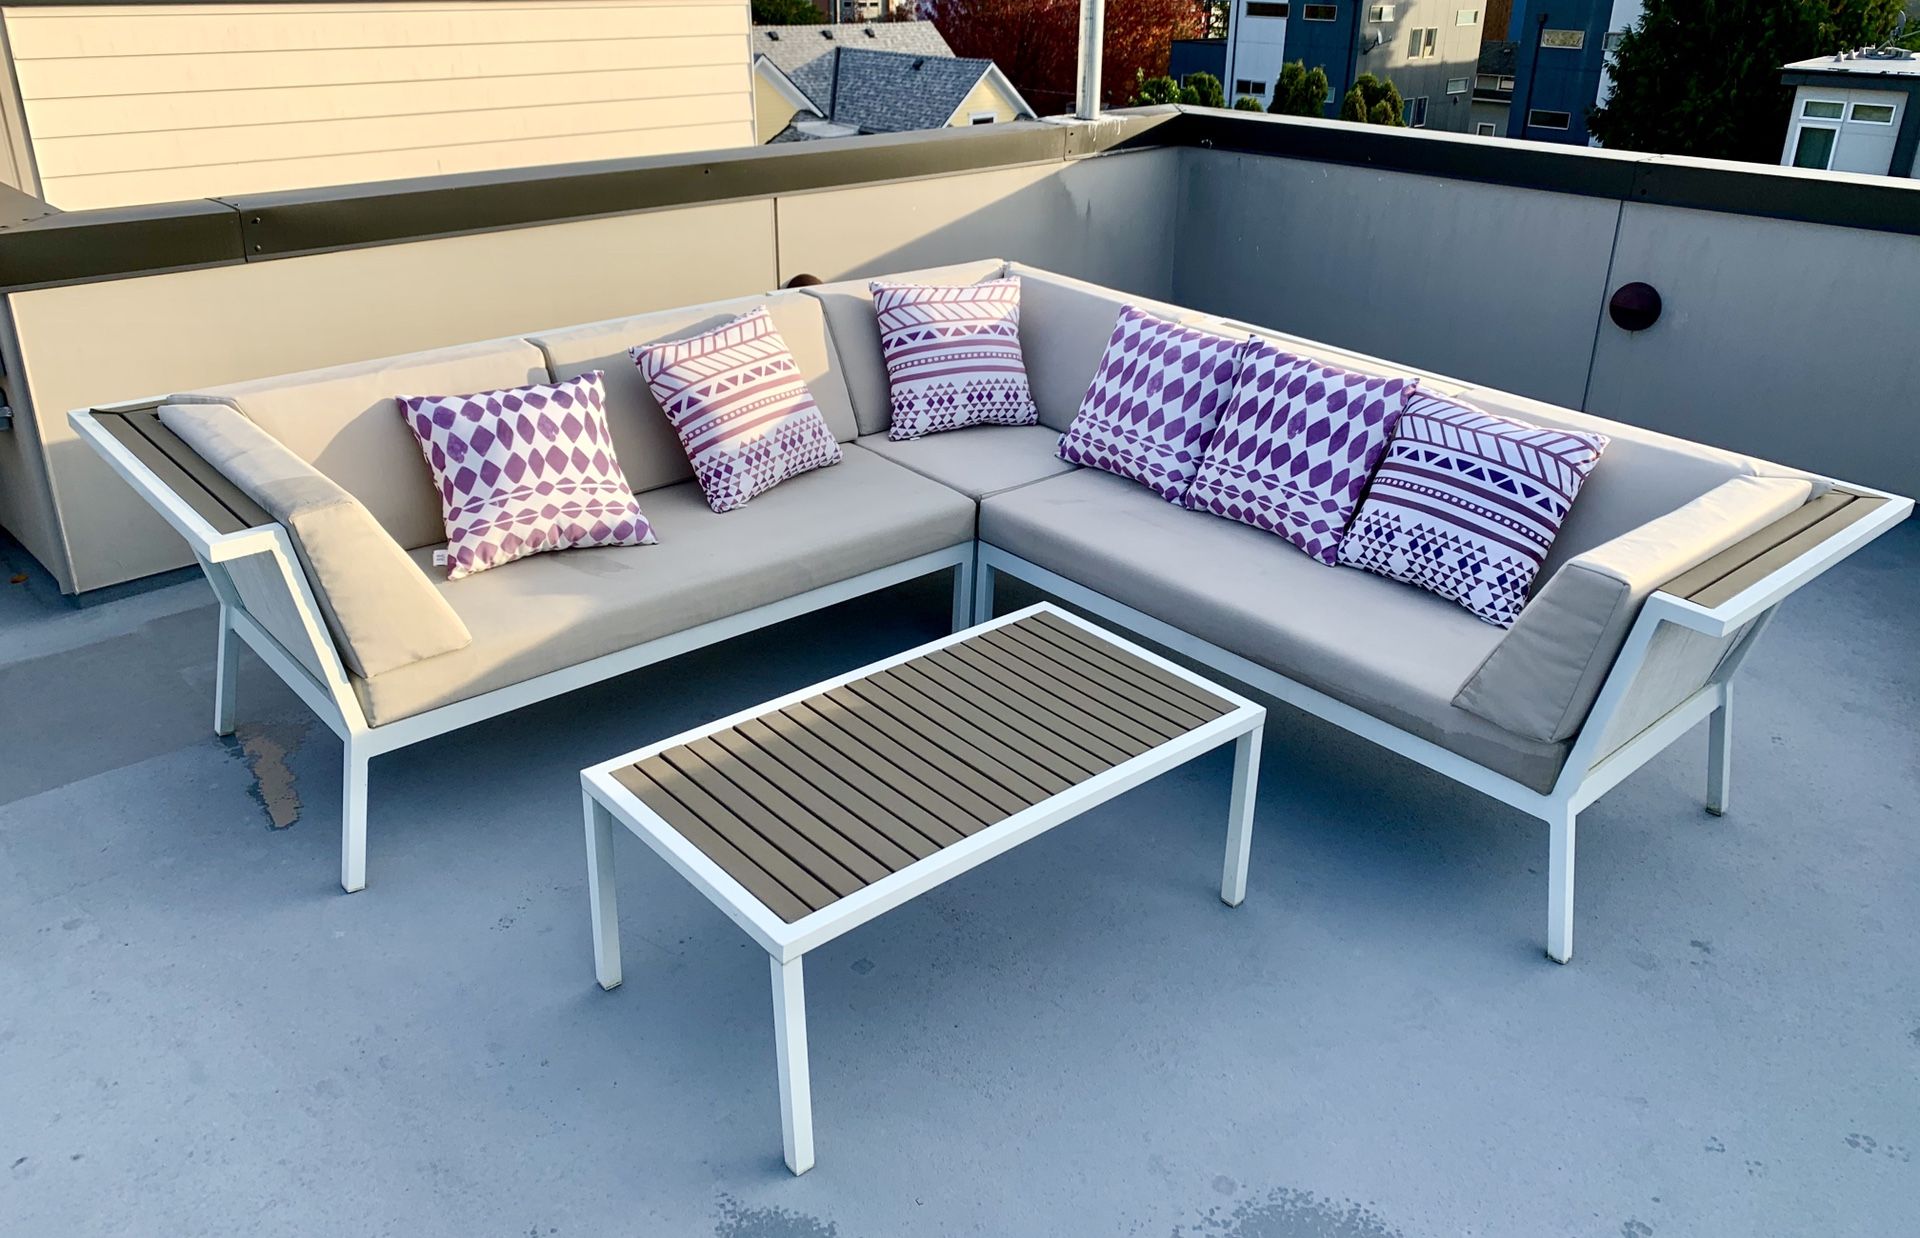 Dania Outdoor Furniture Sofa & Table set with pillows